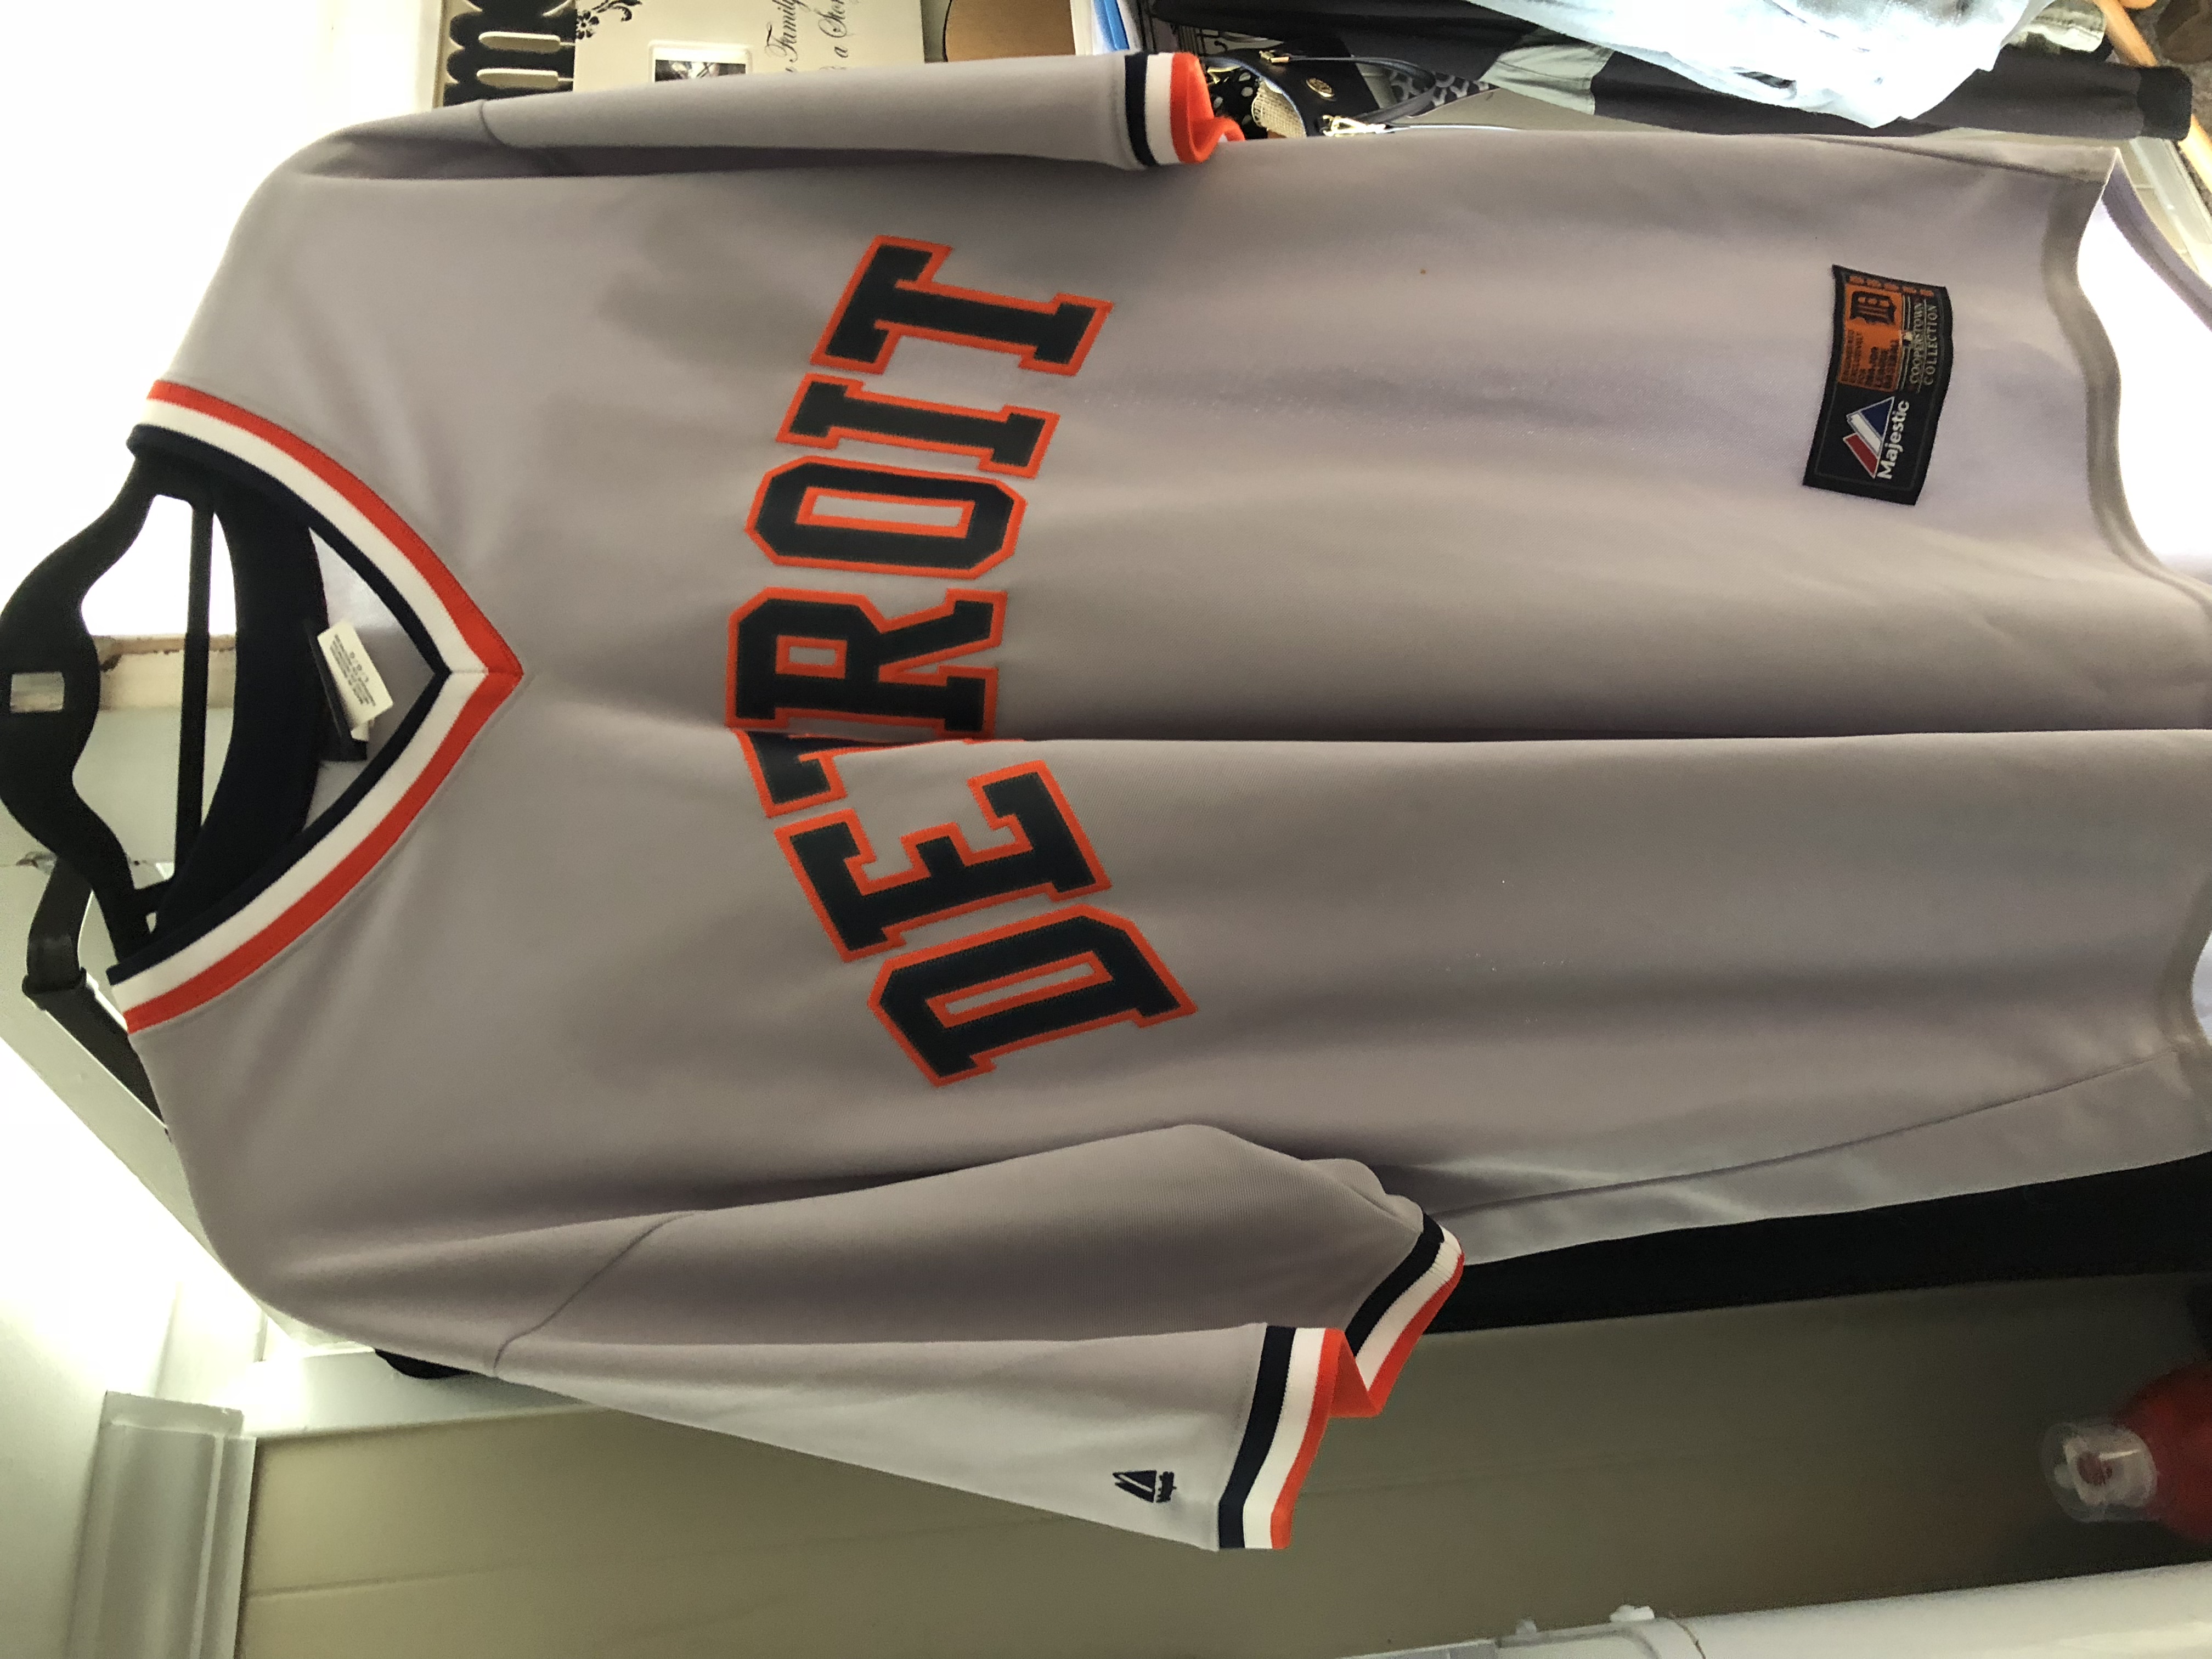 Detroit Tigers Snoopy Custom Name Baseball Jersey - USALast